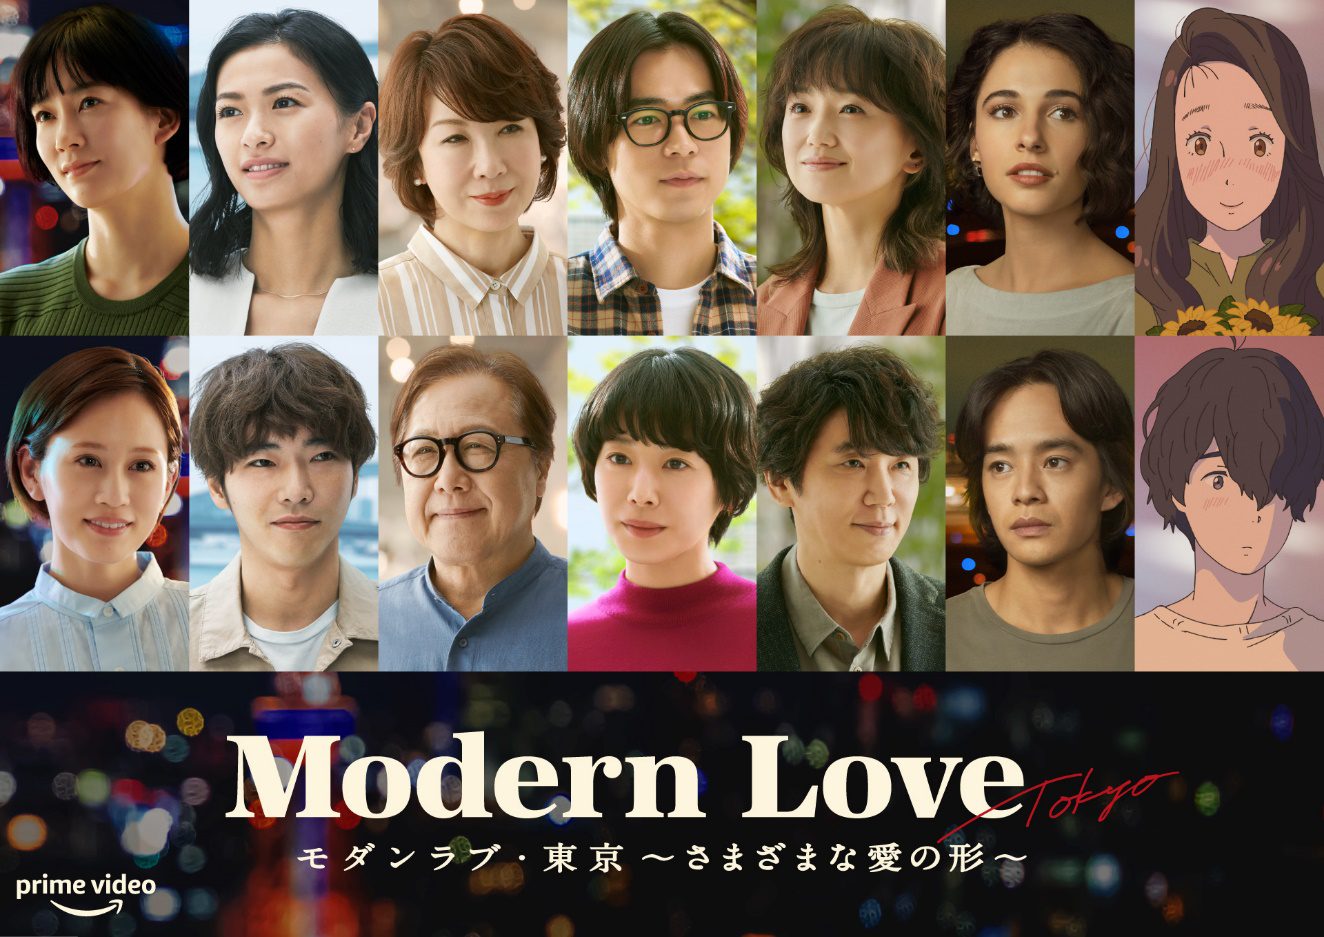 modern love tokyo animeTikTok Search